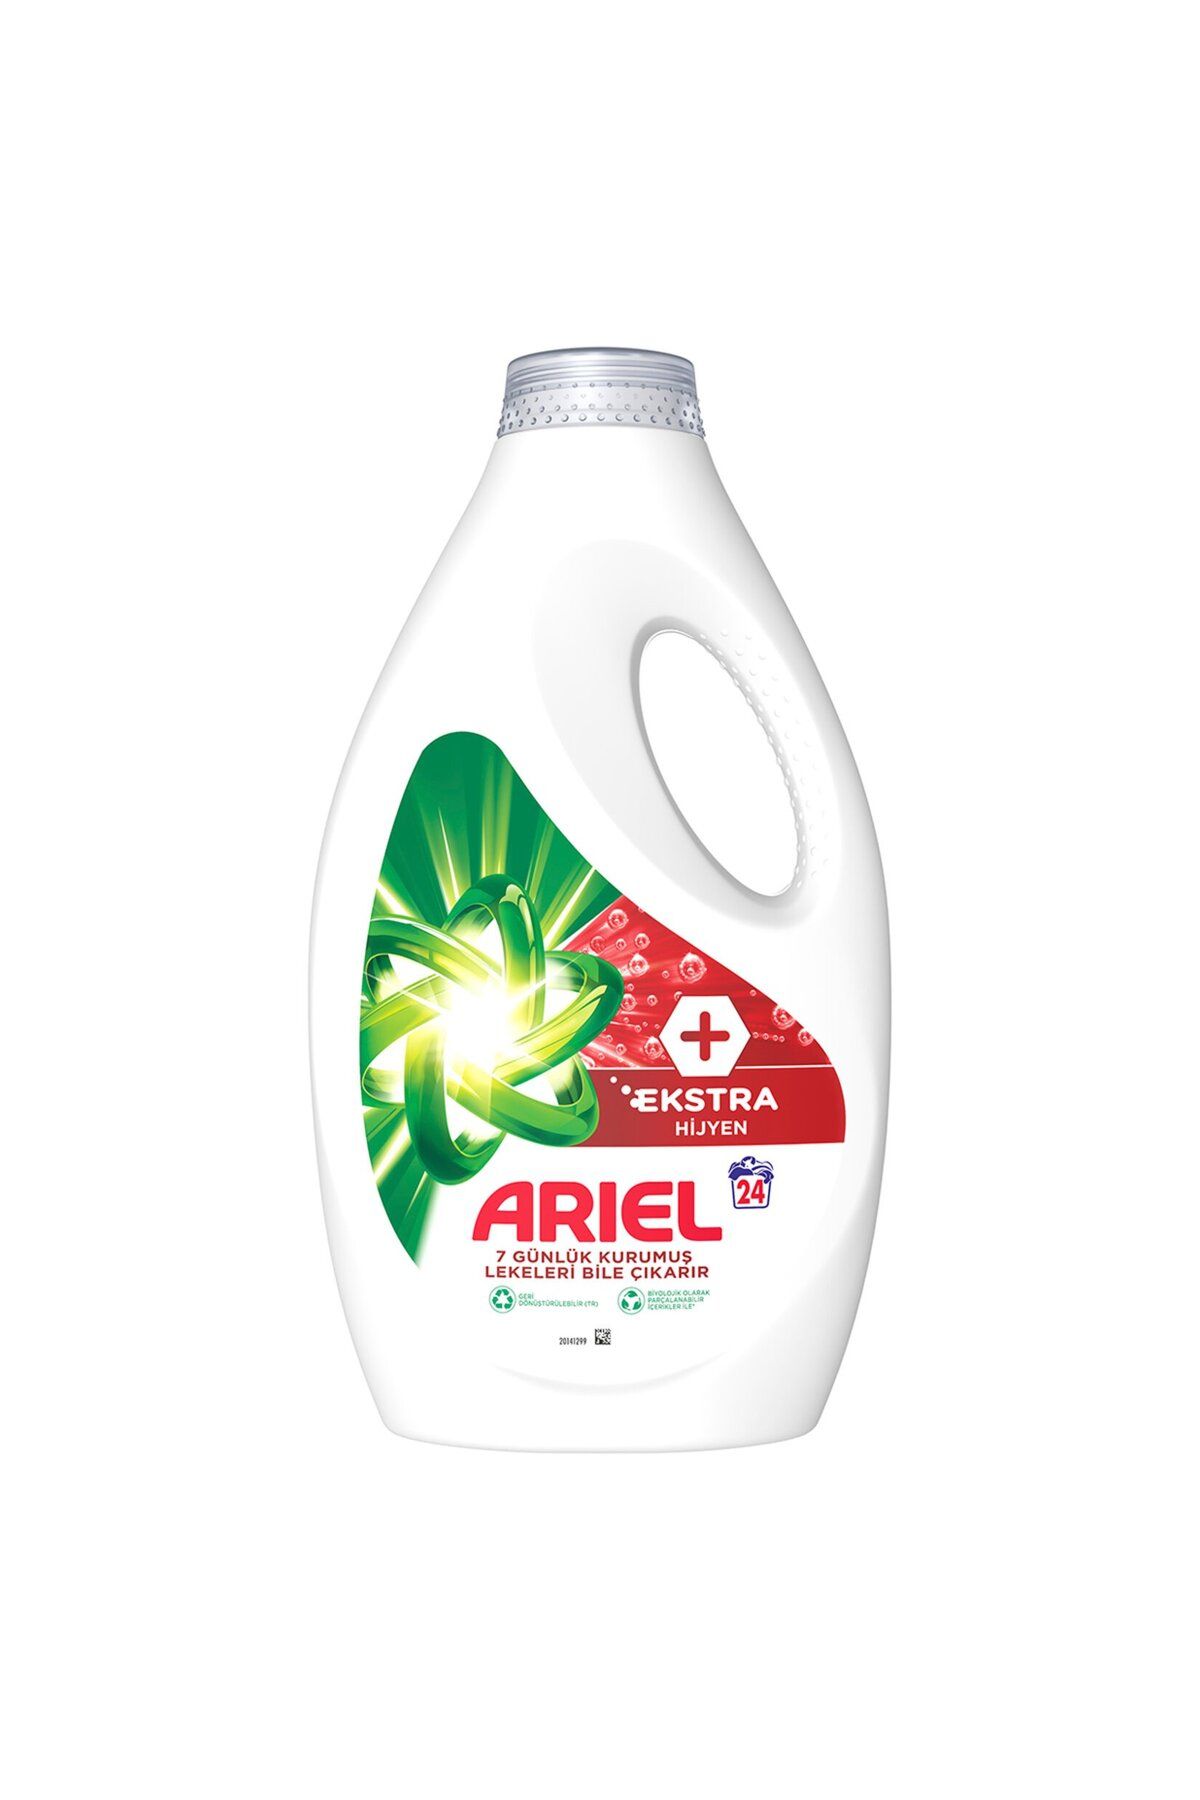 Ariel Oxi Sıvı Deterjan 24 Yıkama 1.2 L